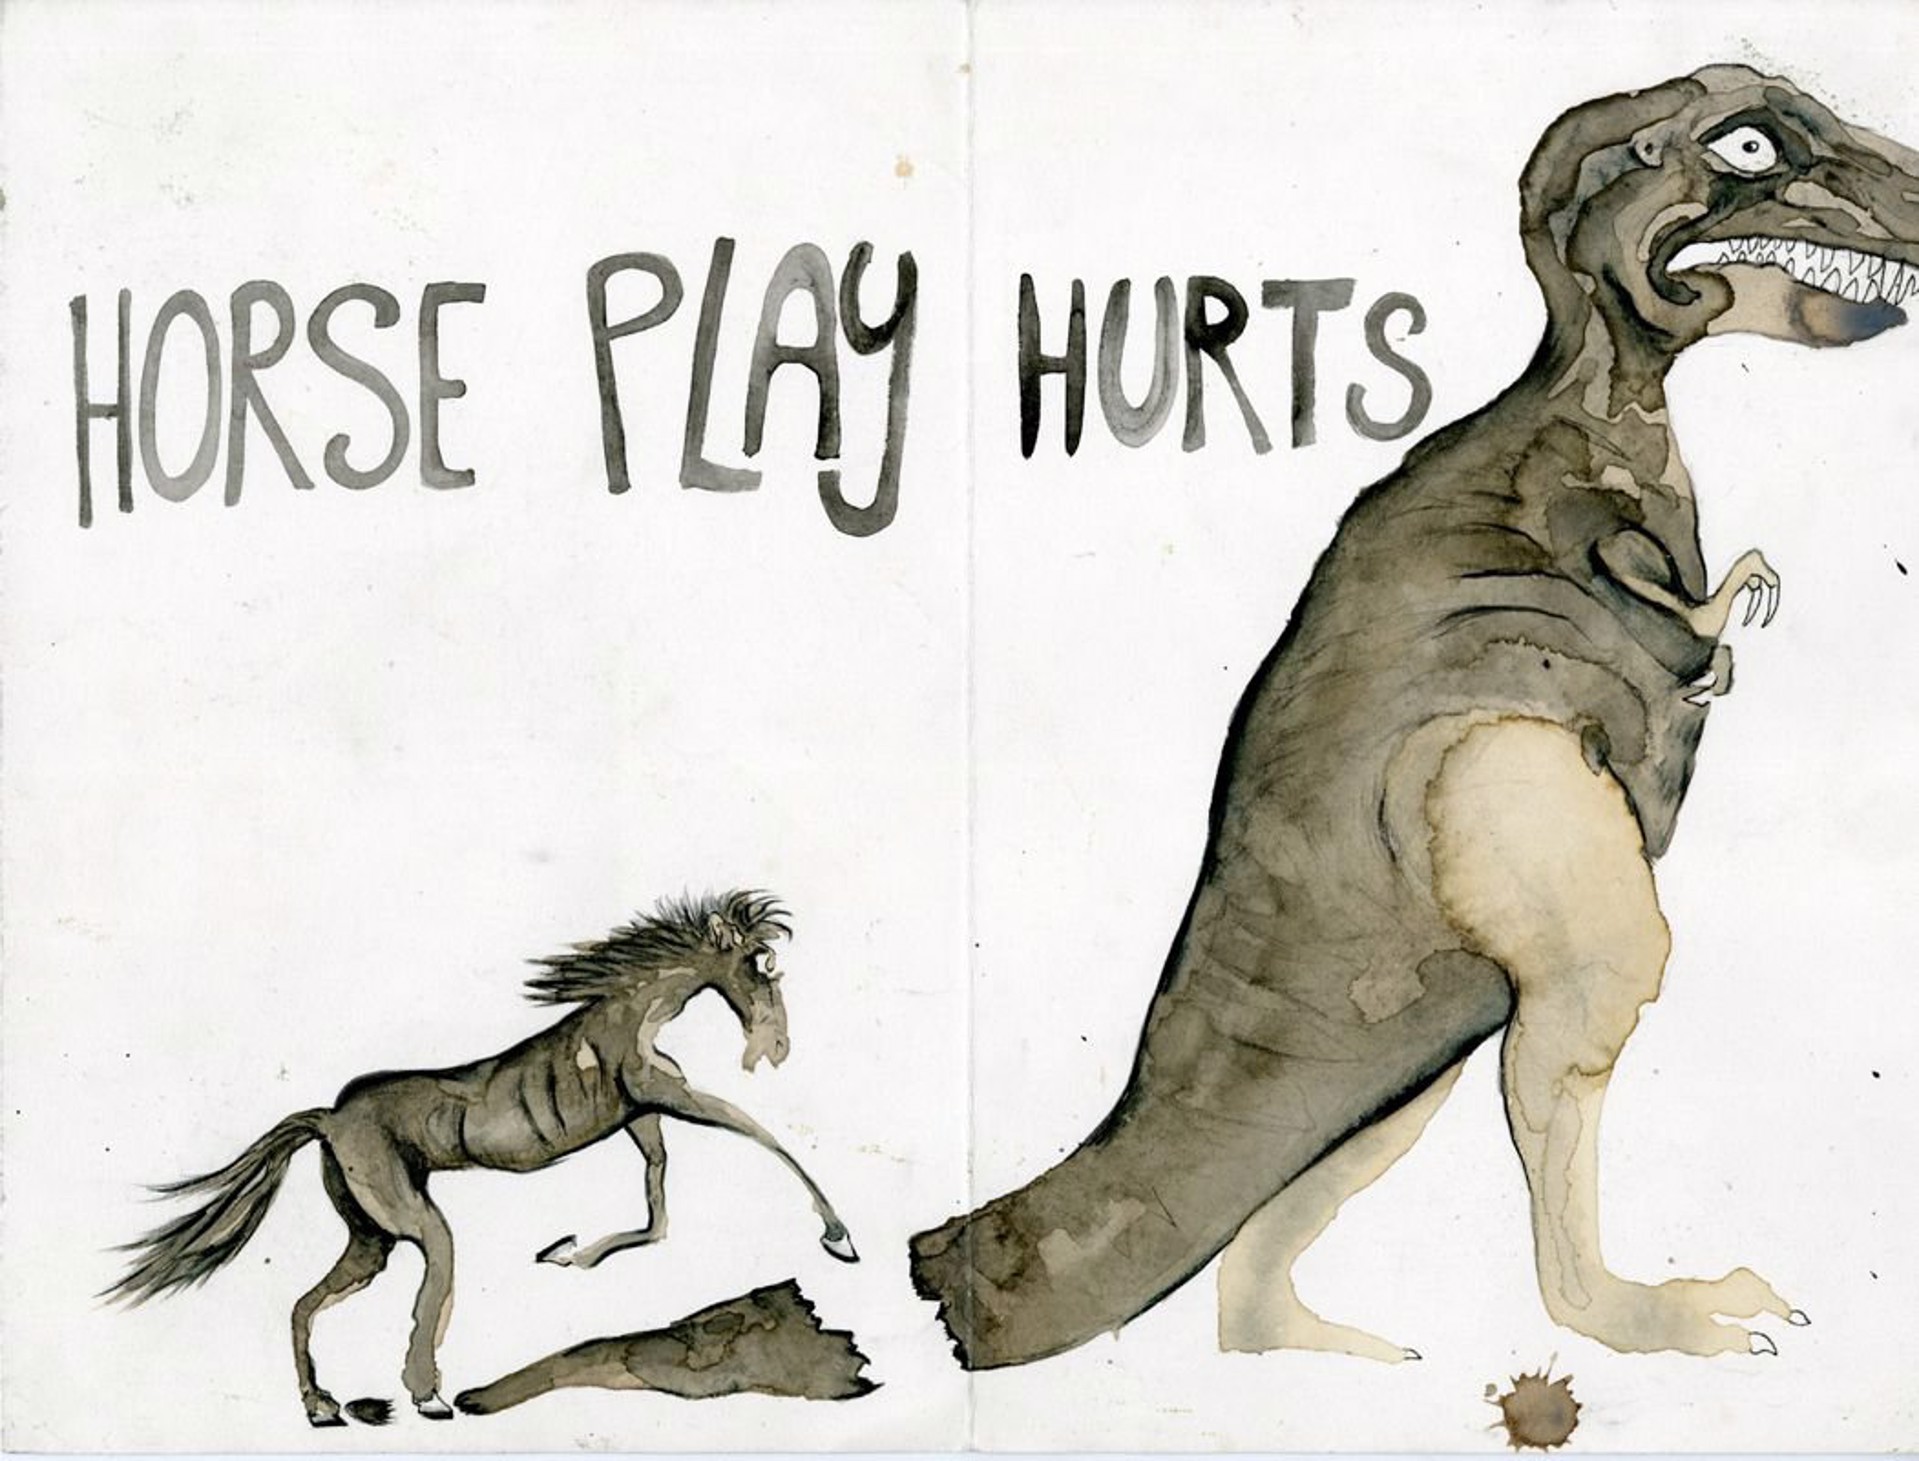 Horse Play Hurts by Jim Holyoak